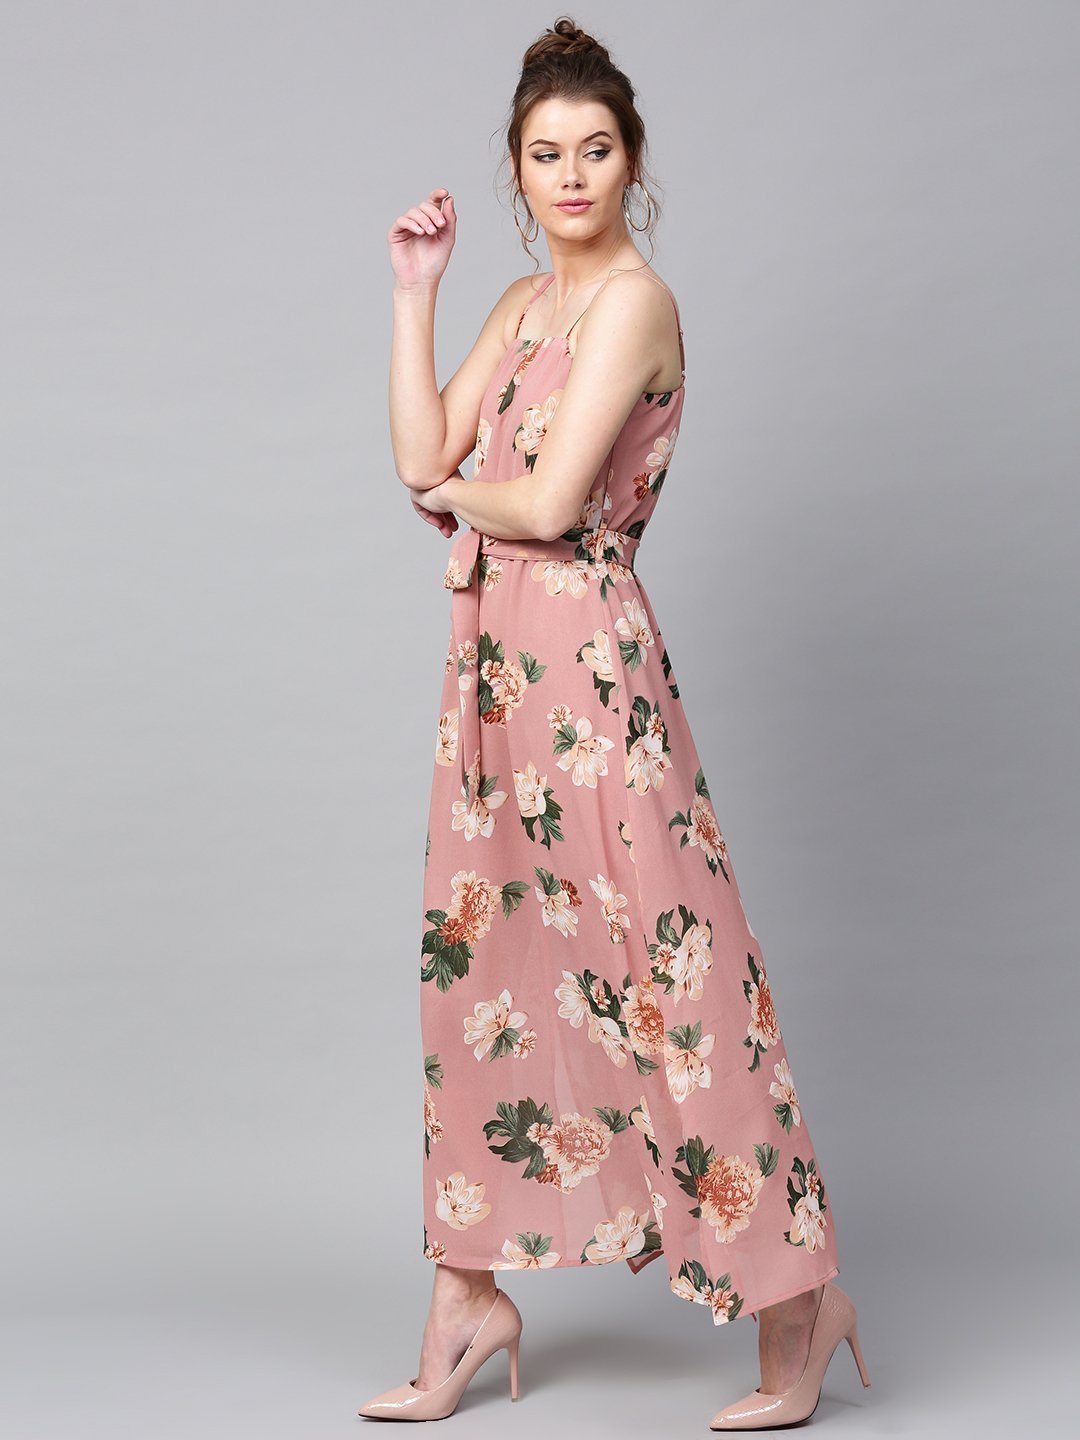 Dress Star - Dress - Floral Printed Maxi Dress - Dusty Pink And Green - 11518762643480-SASSAFRAS-Women-Pink-Printed-Maxi-Dress-8201518762643321-4_c35e0c9c-7369-439e-9693-69aad5d33dd2